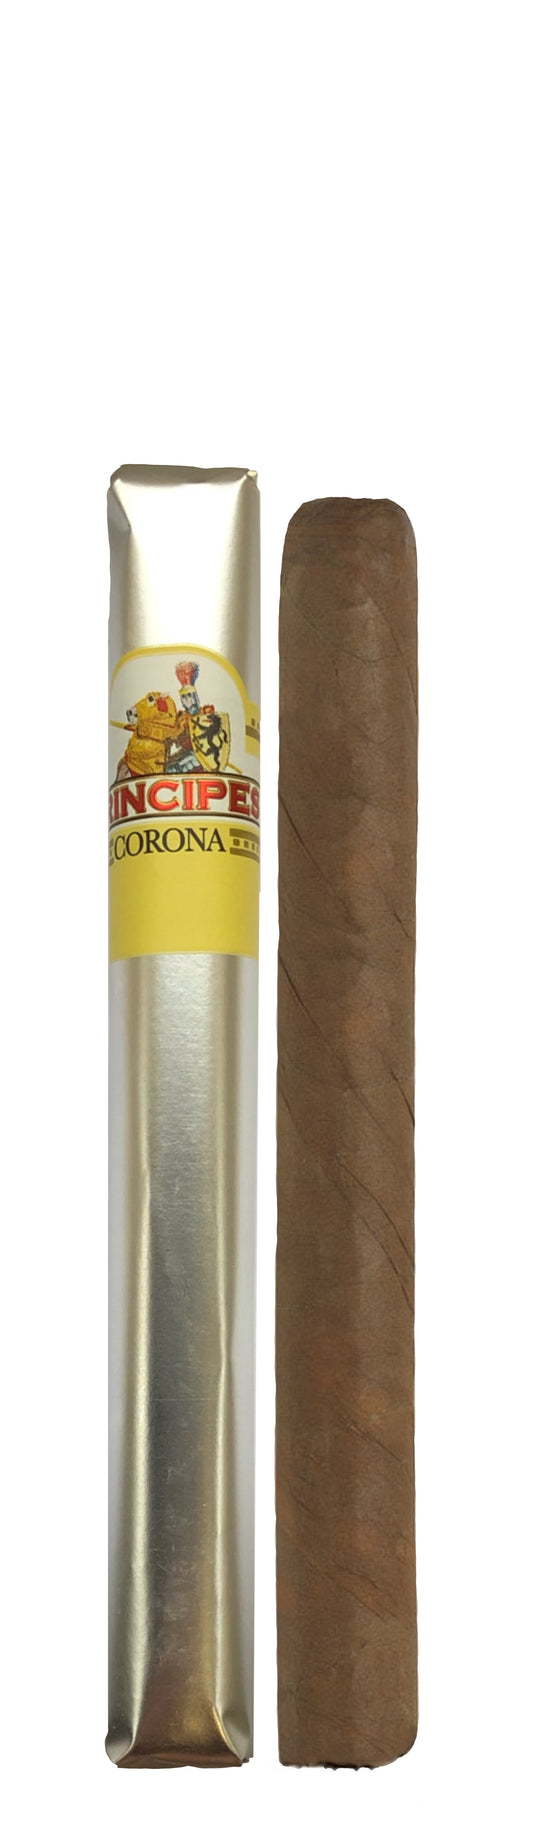 La Aurora Principes Blond (Vanilla) Flavoured Corona - Pack of 5 Cigars